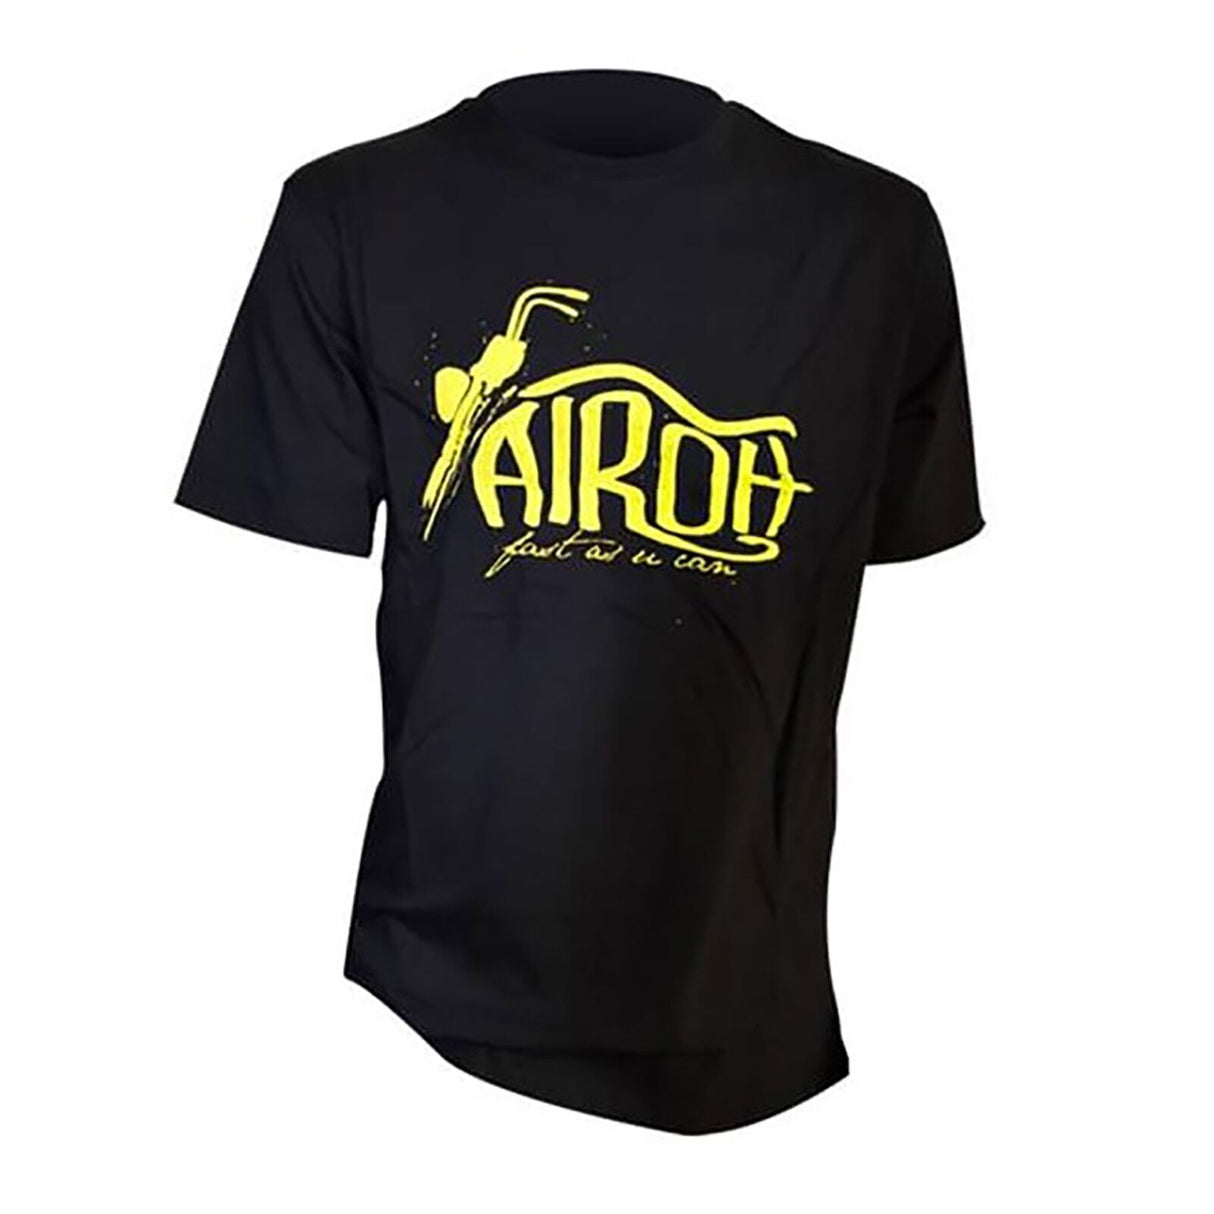 Airoh T-Shirt - Black